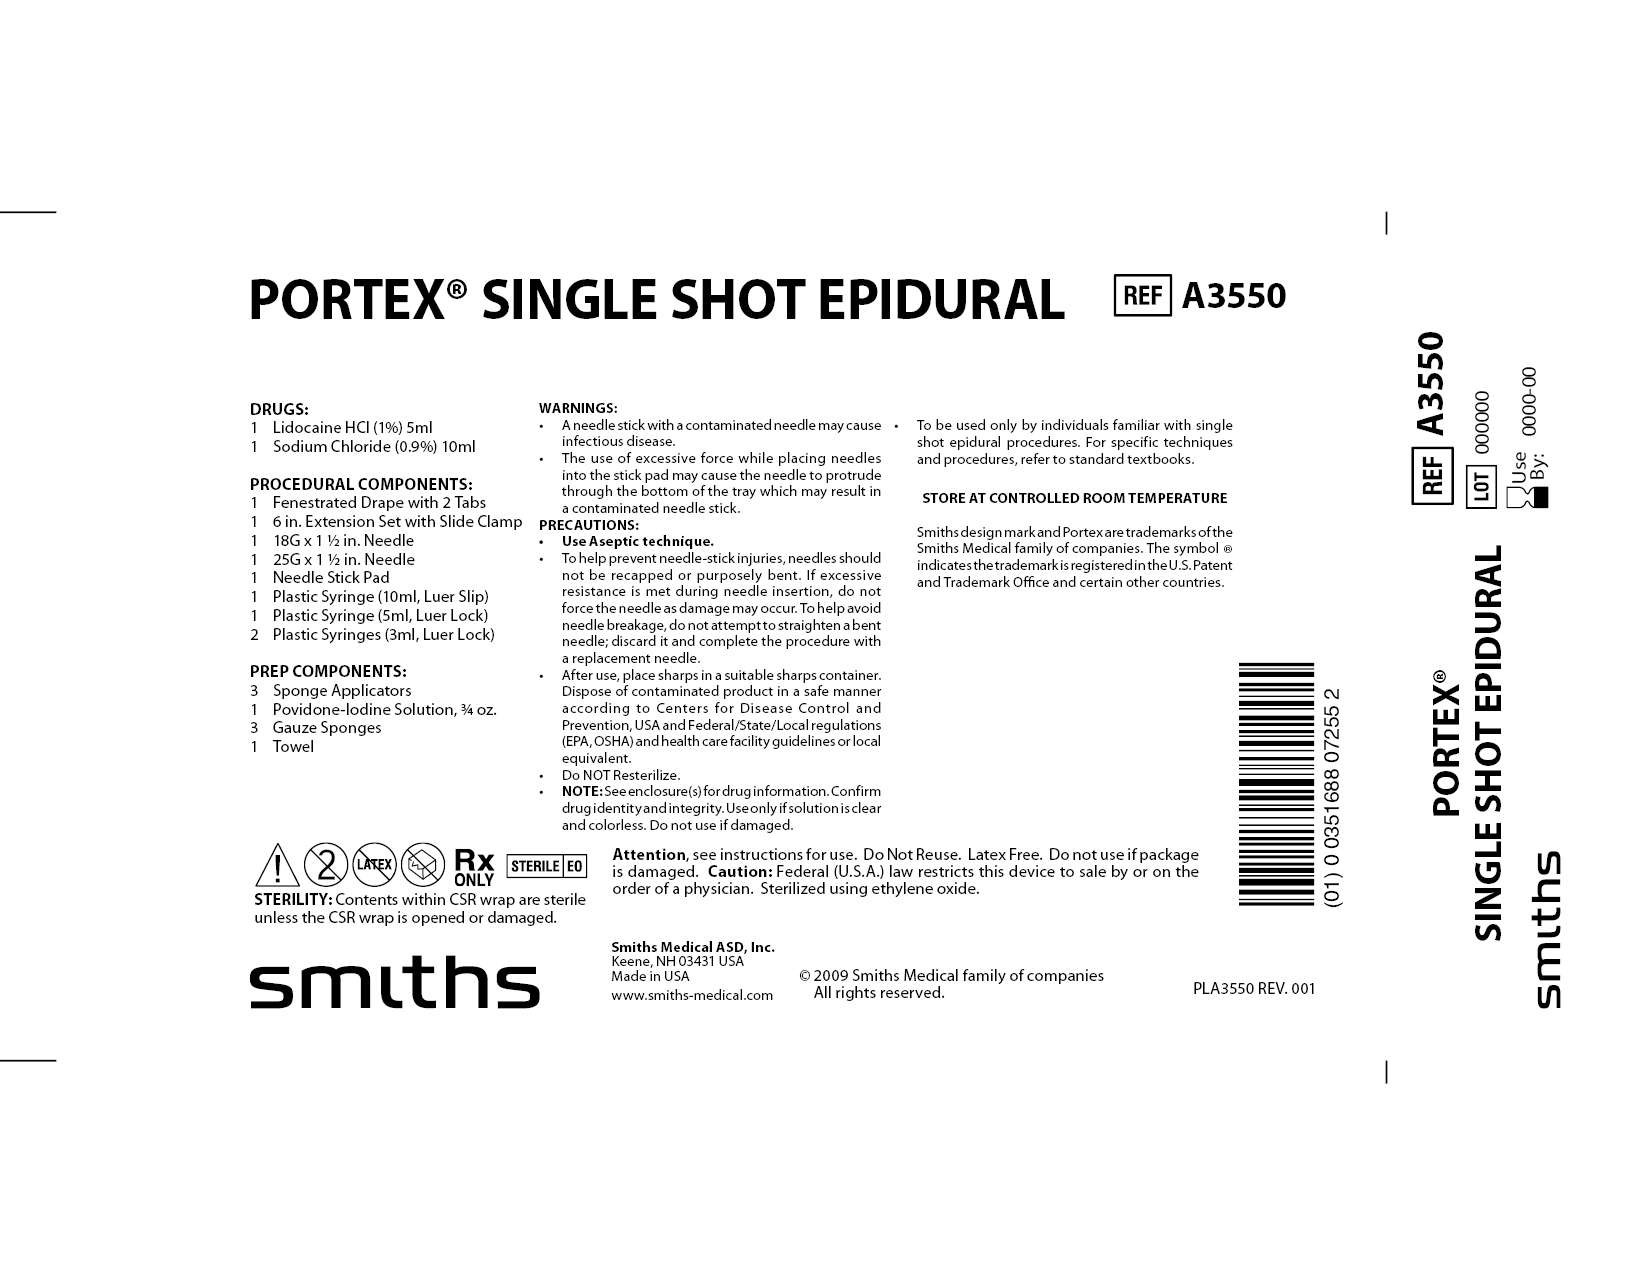 PORTEX SINGLE SHOT EPIDURAL